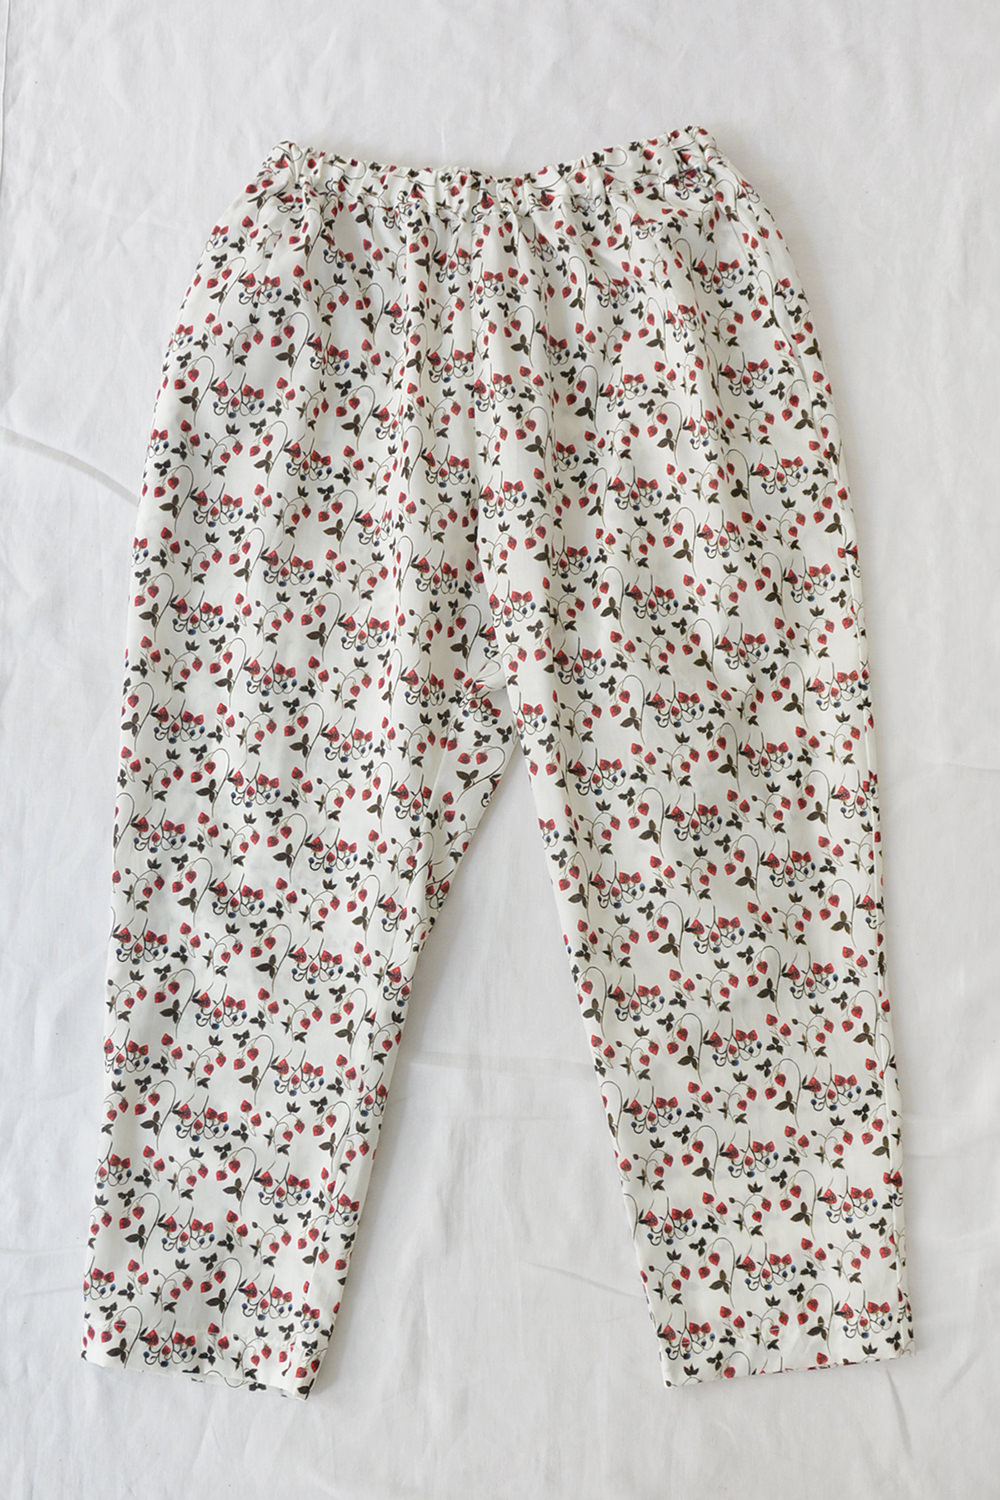 H&M Cargo Pants (customized) : r/TechWear